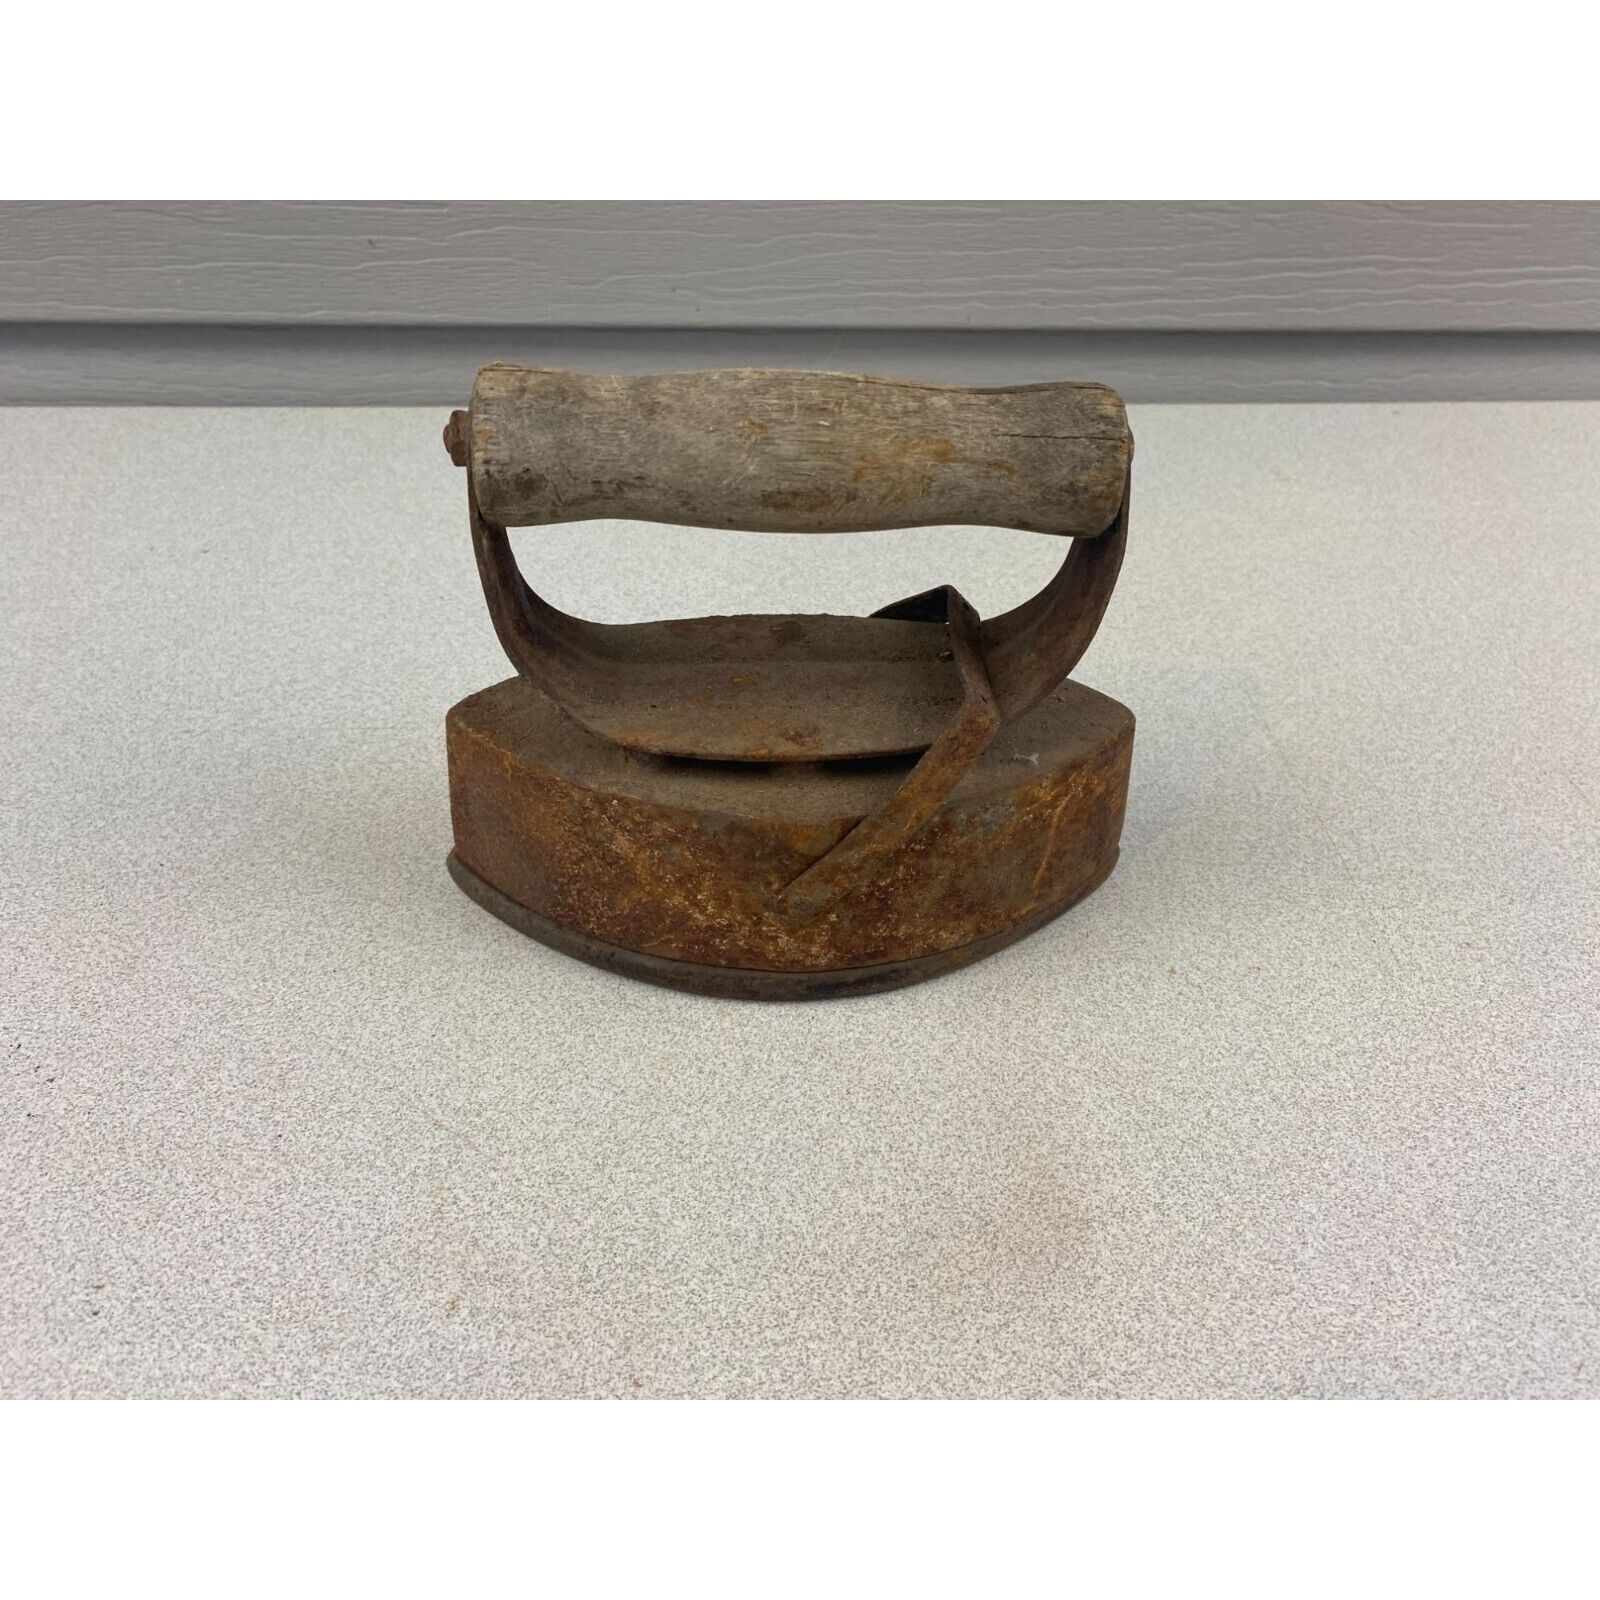 Vintage Asbestos Sad Iron Metal With Wood Handle Unrestored As Found